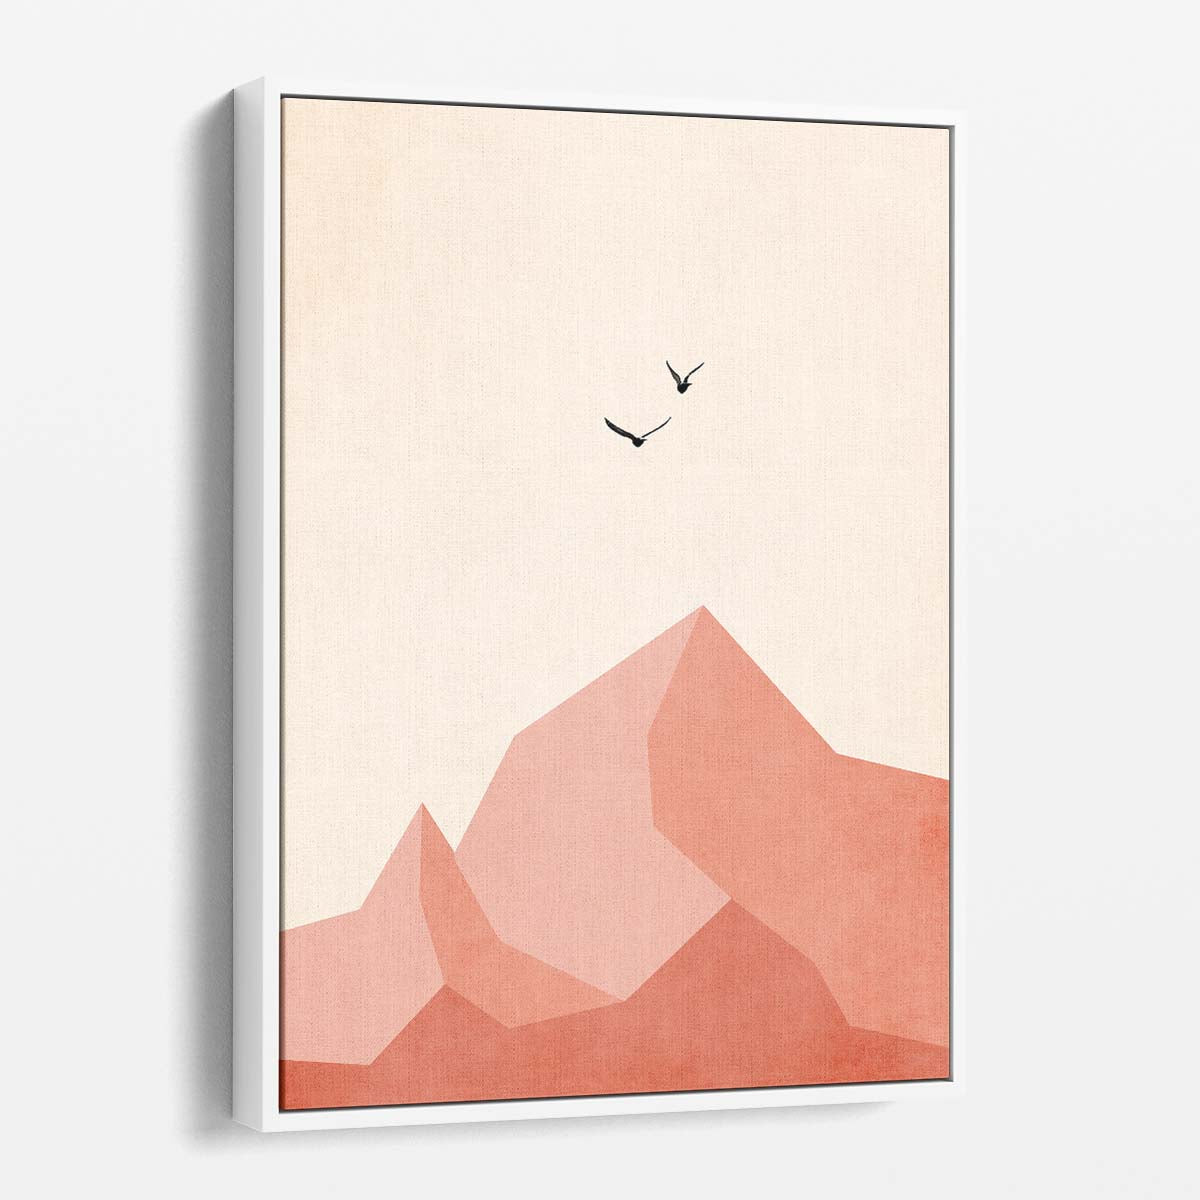 Kubistika's Bright Red Bird Illustration on Zugspitze Mountain Landscape by Luxuriance Designs, made in USA